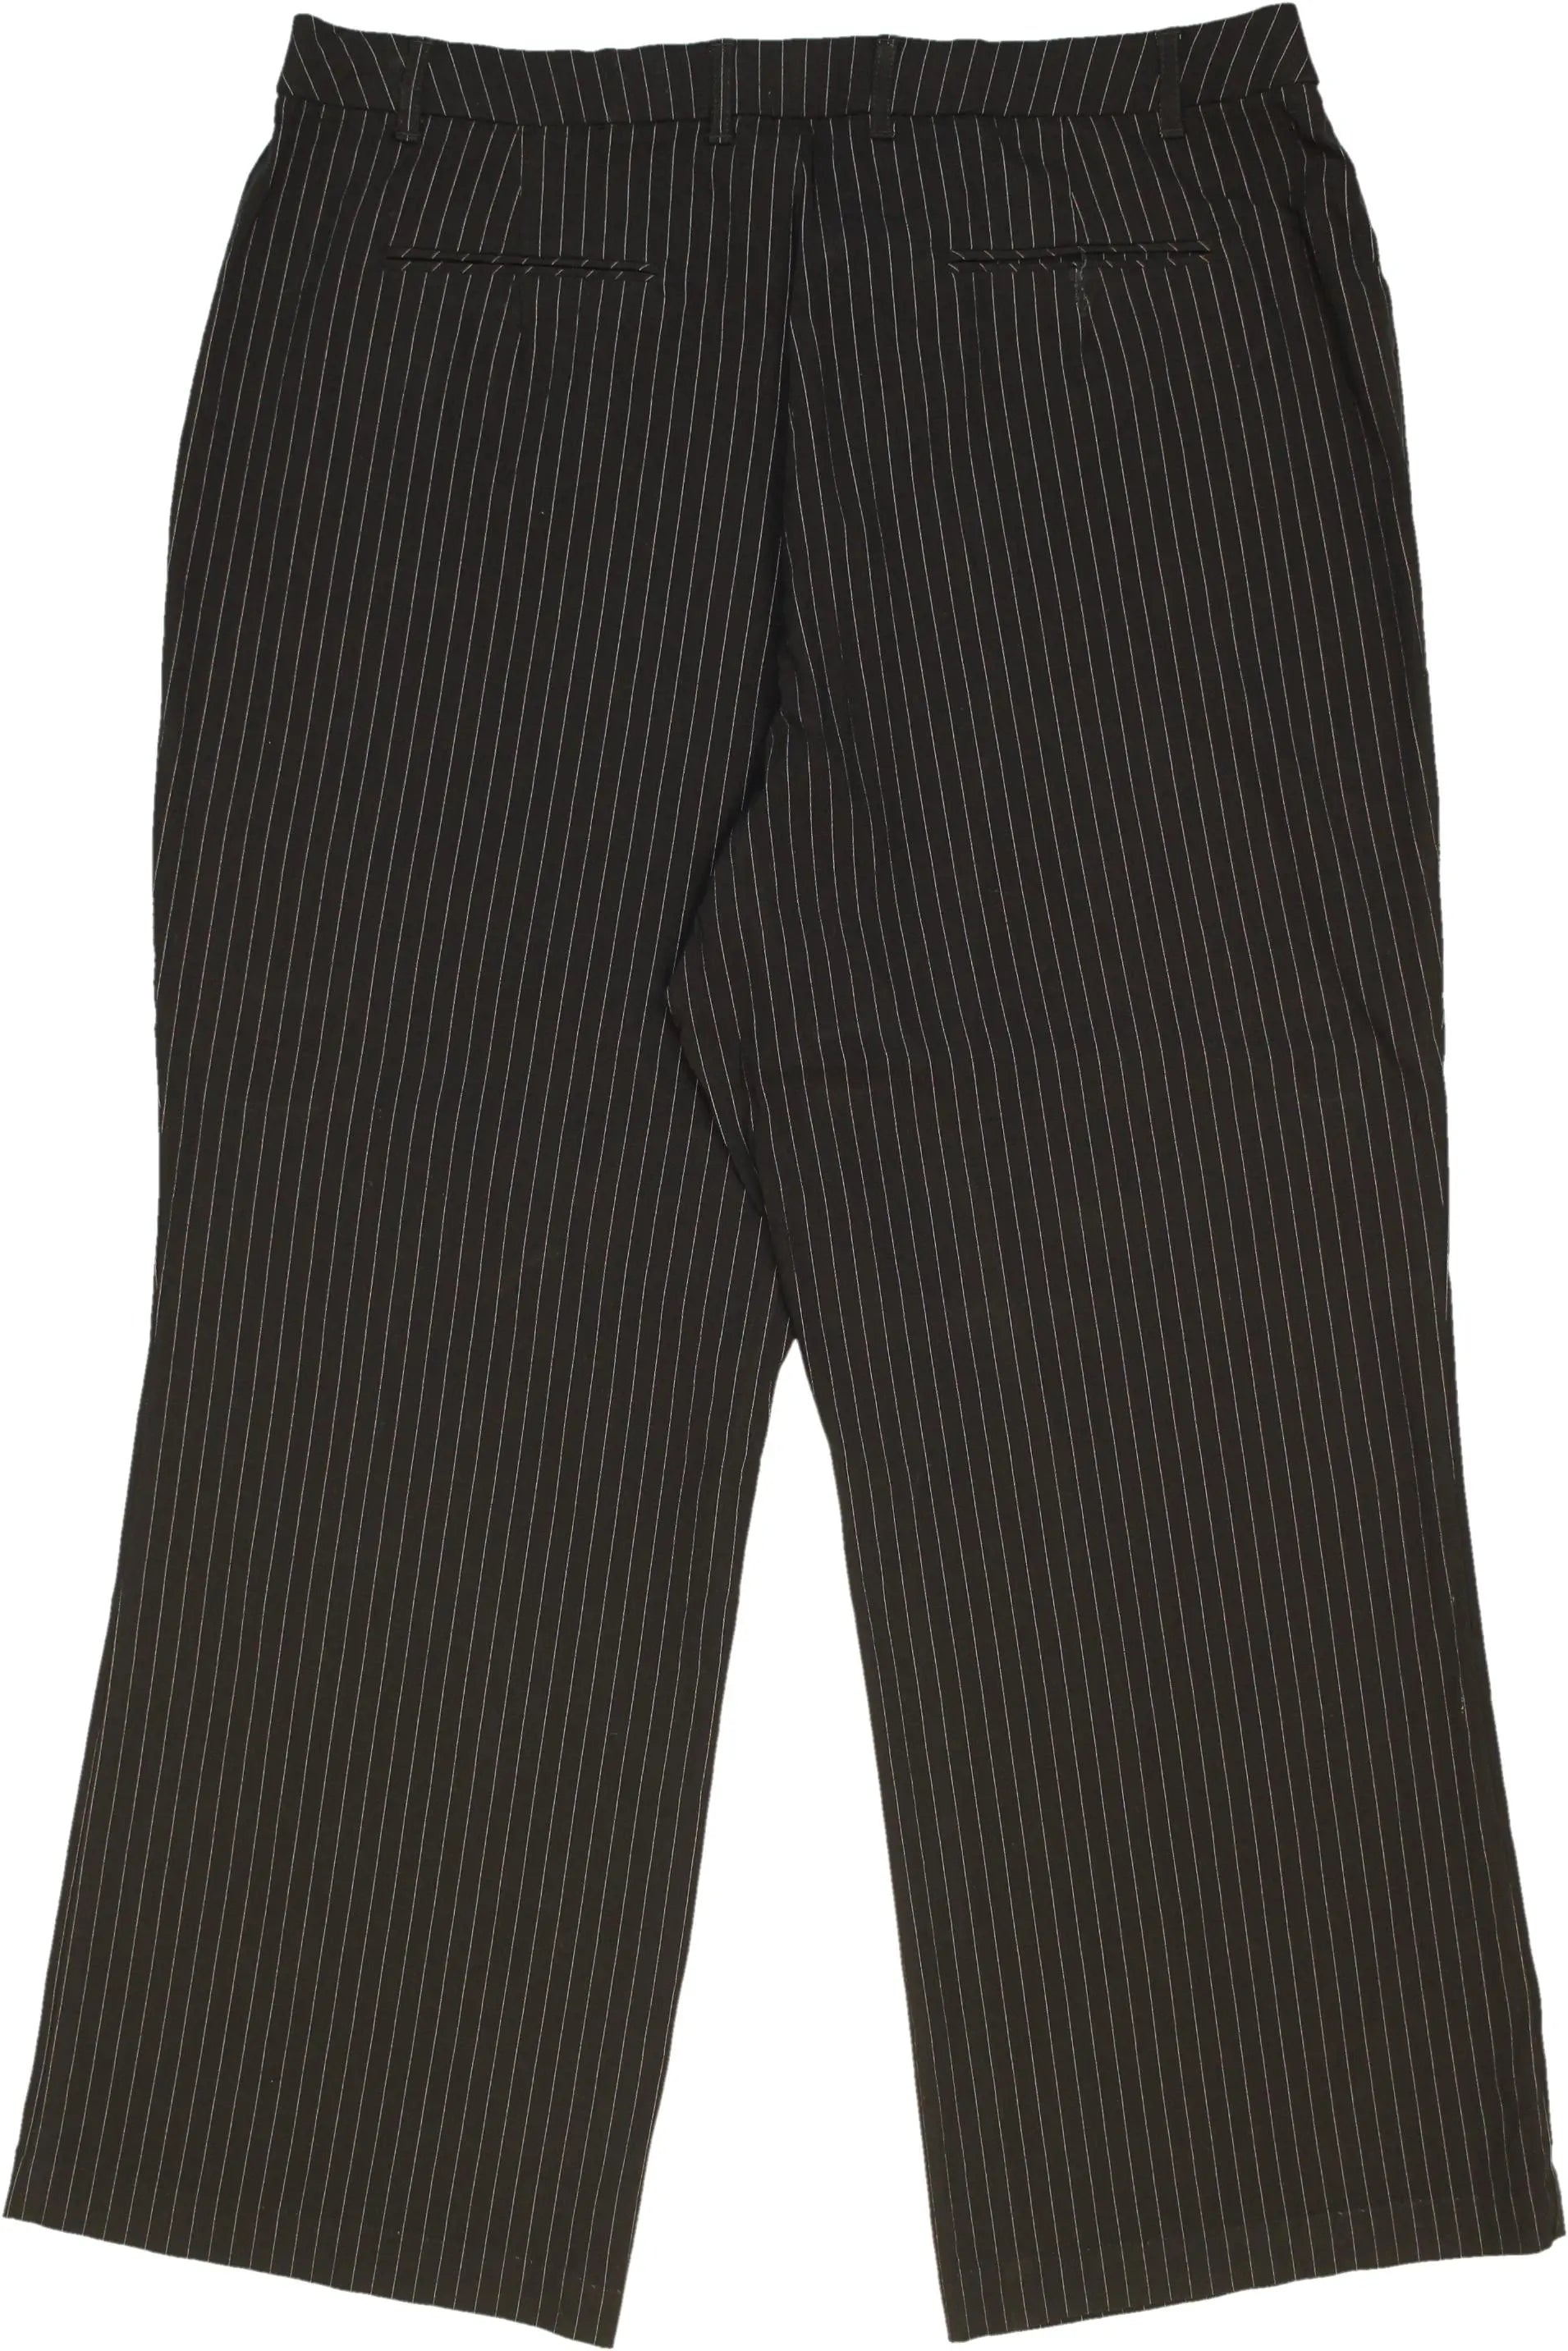 Miss Etam - Striped Pants- ThriftTale.com - Vintage and second handclothing